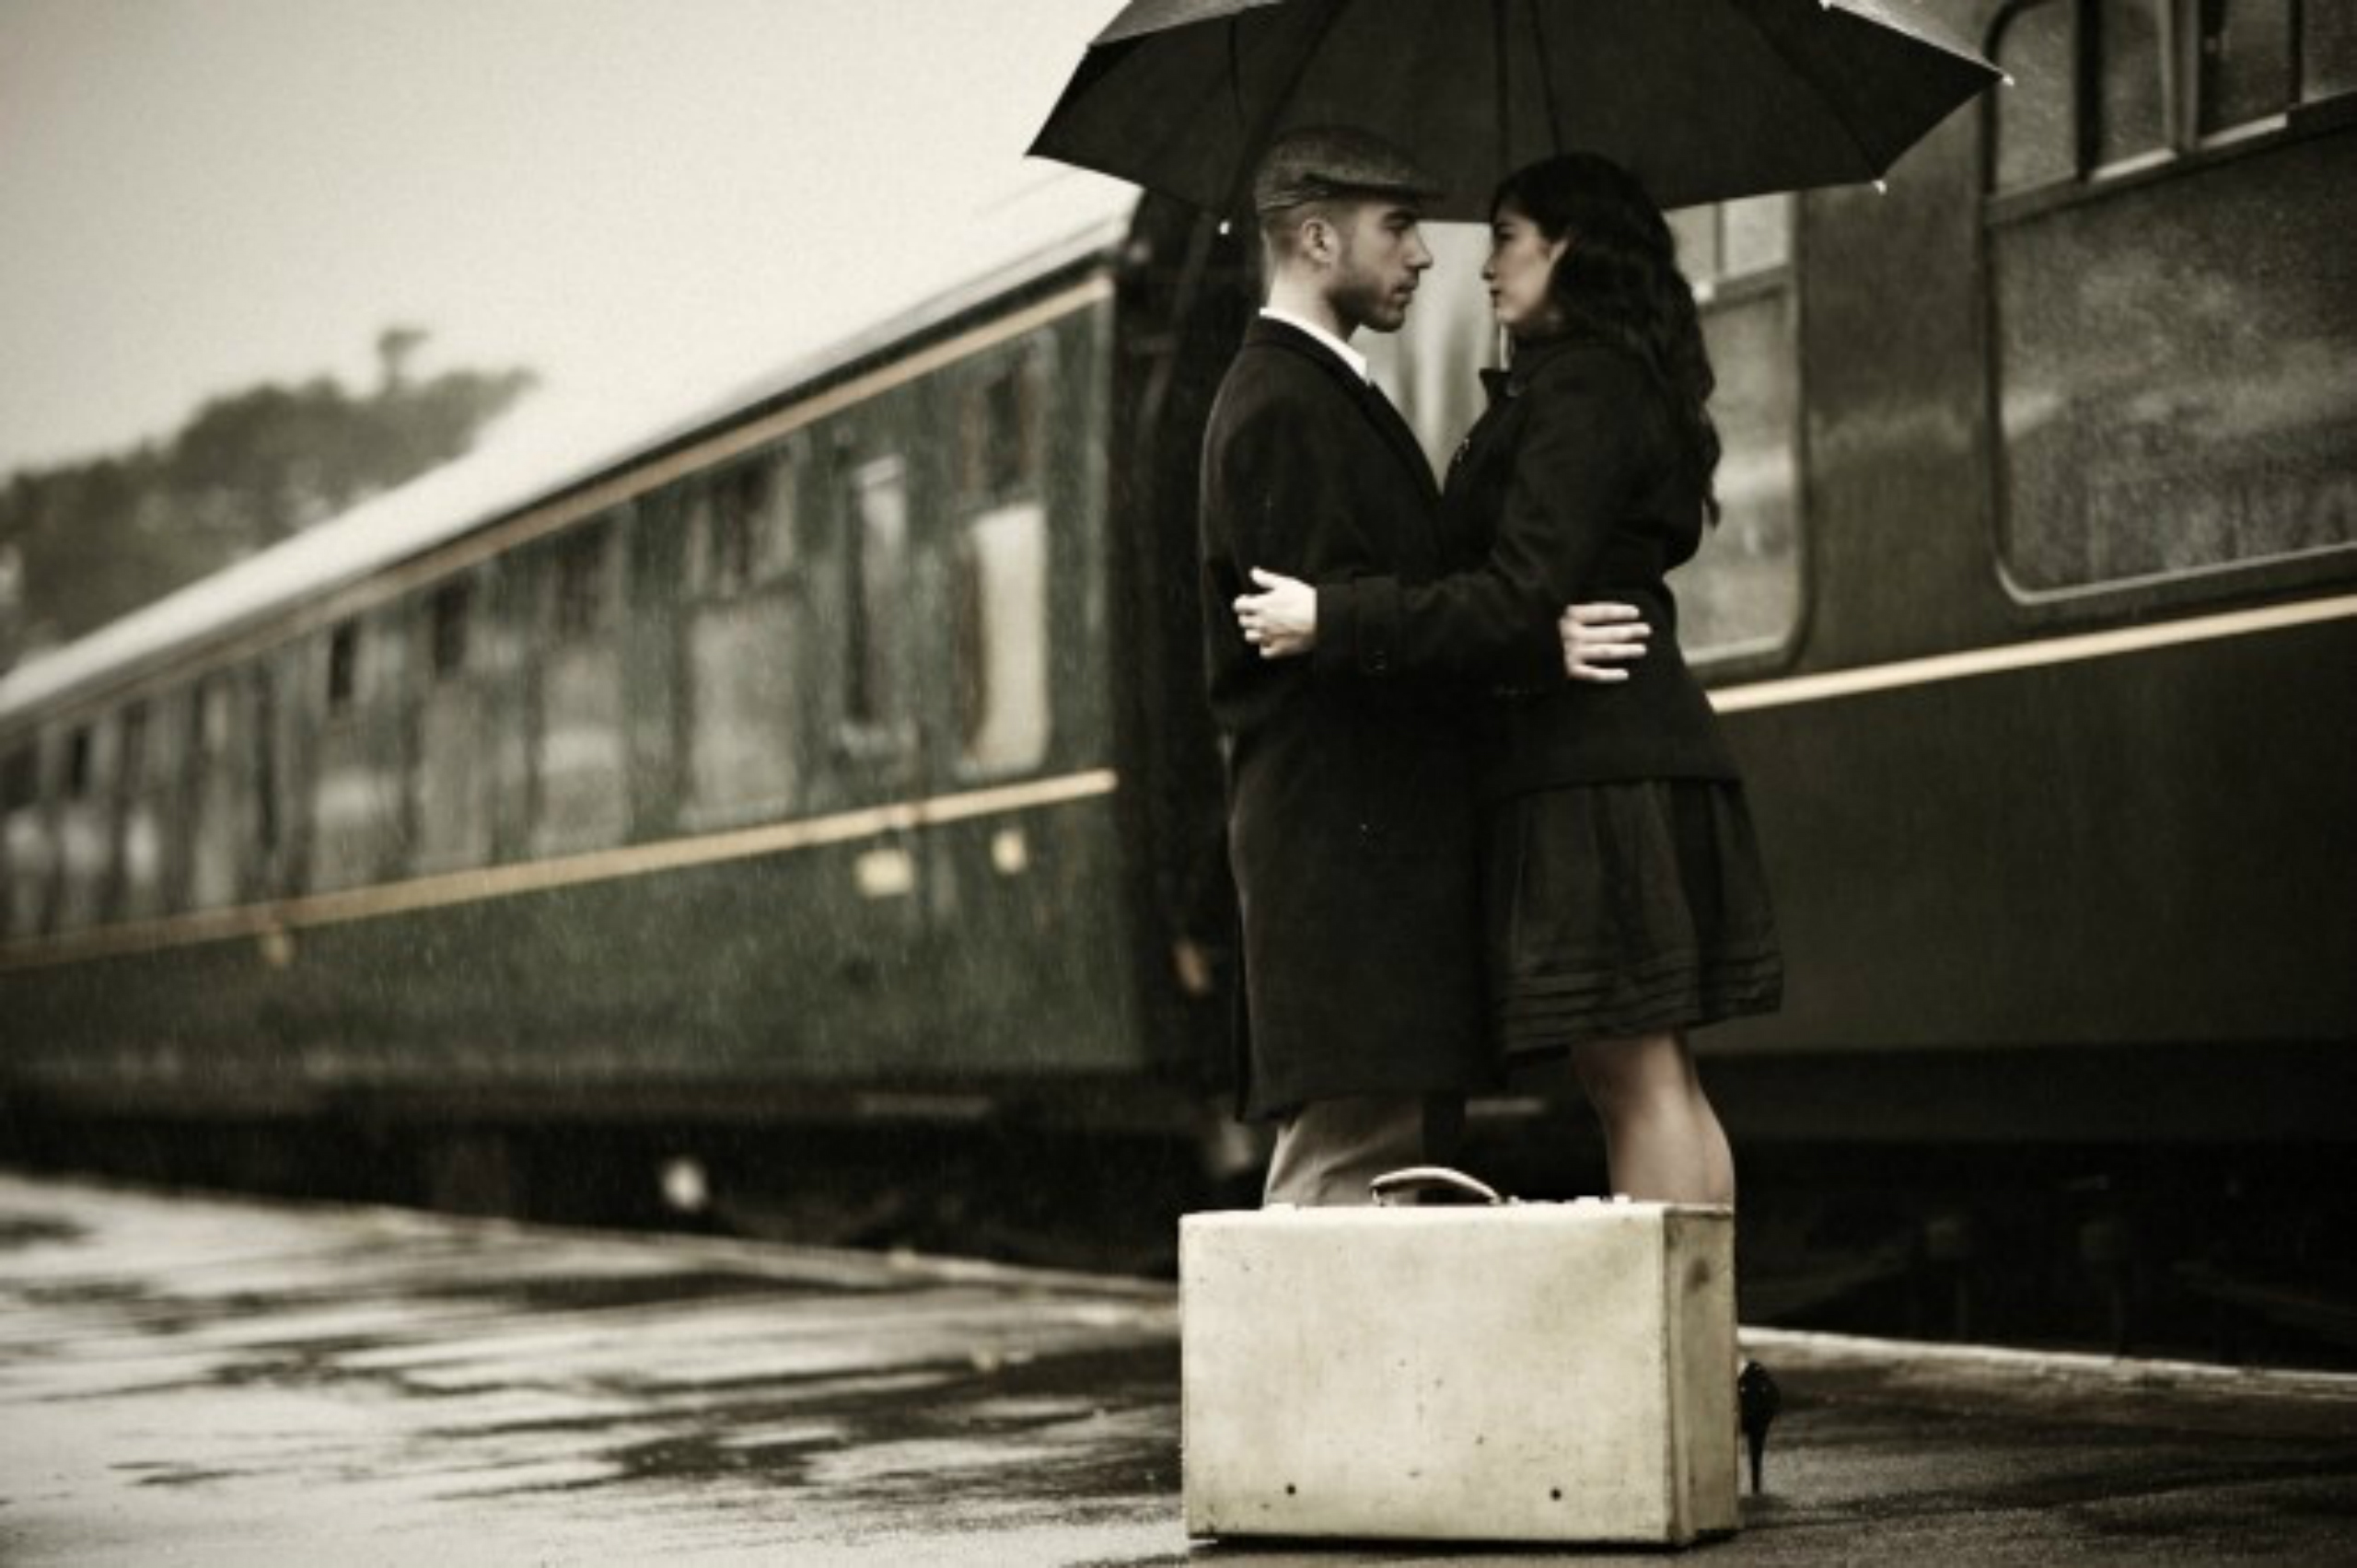 Прощание ч. Встреча на вокзале. Расставание на вокзале. Поцелуй на вокзале. Парень и девушка на вокзале.